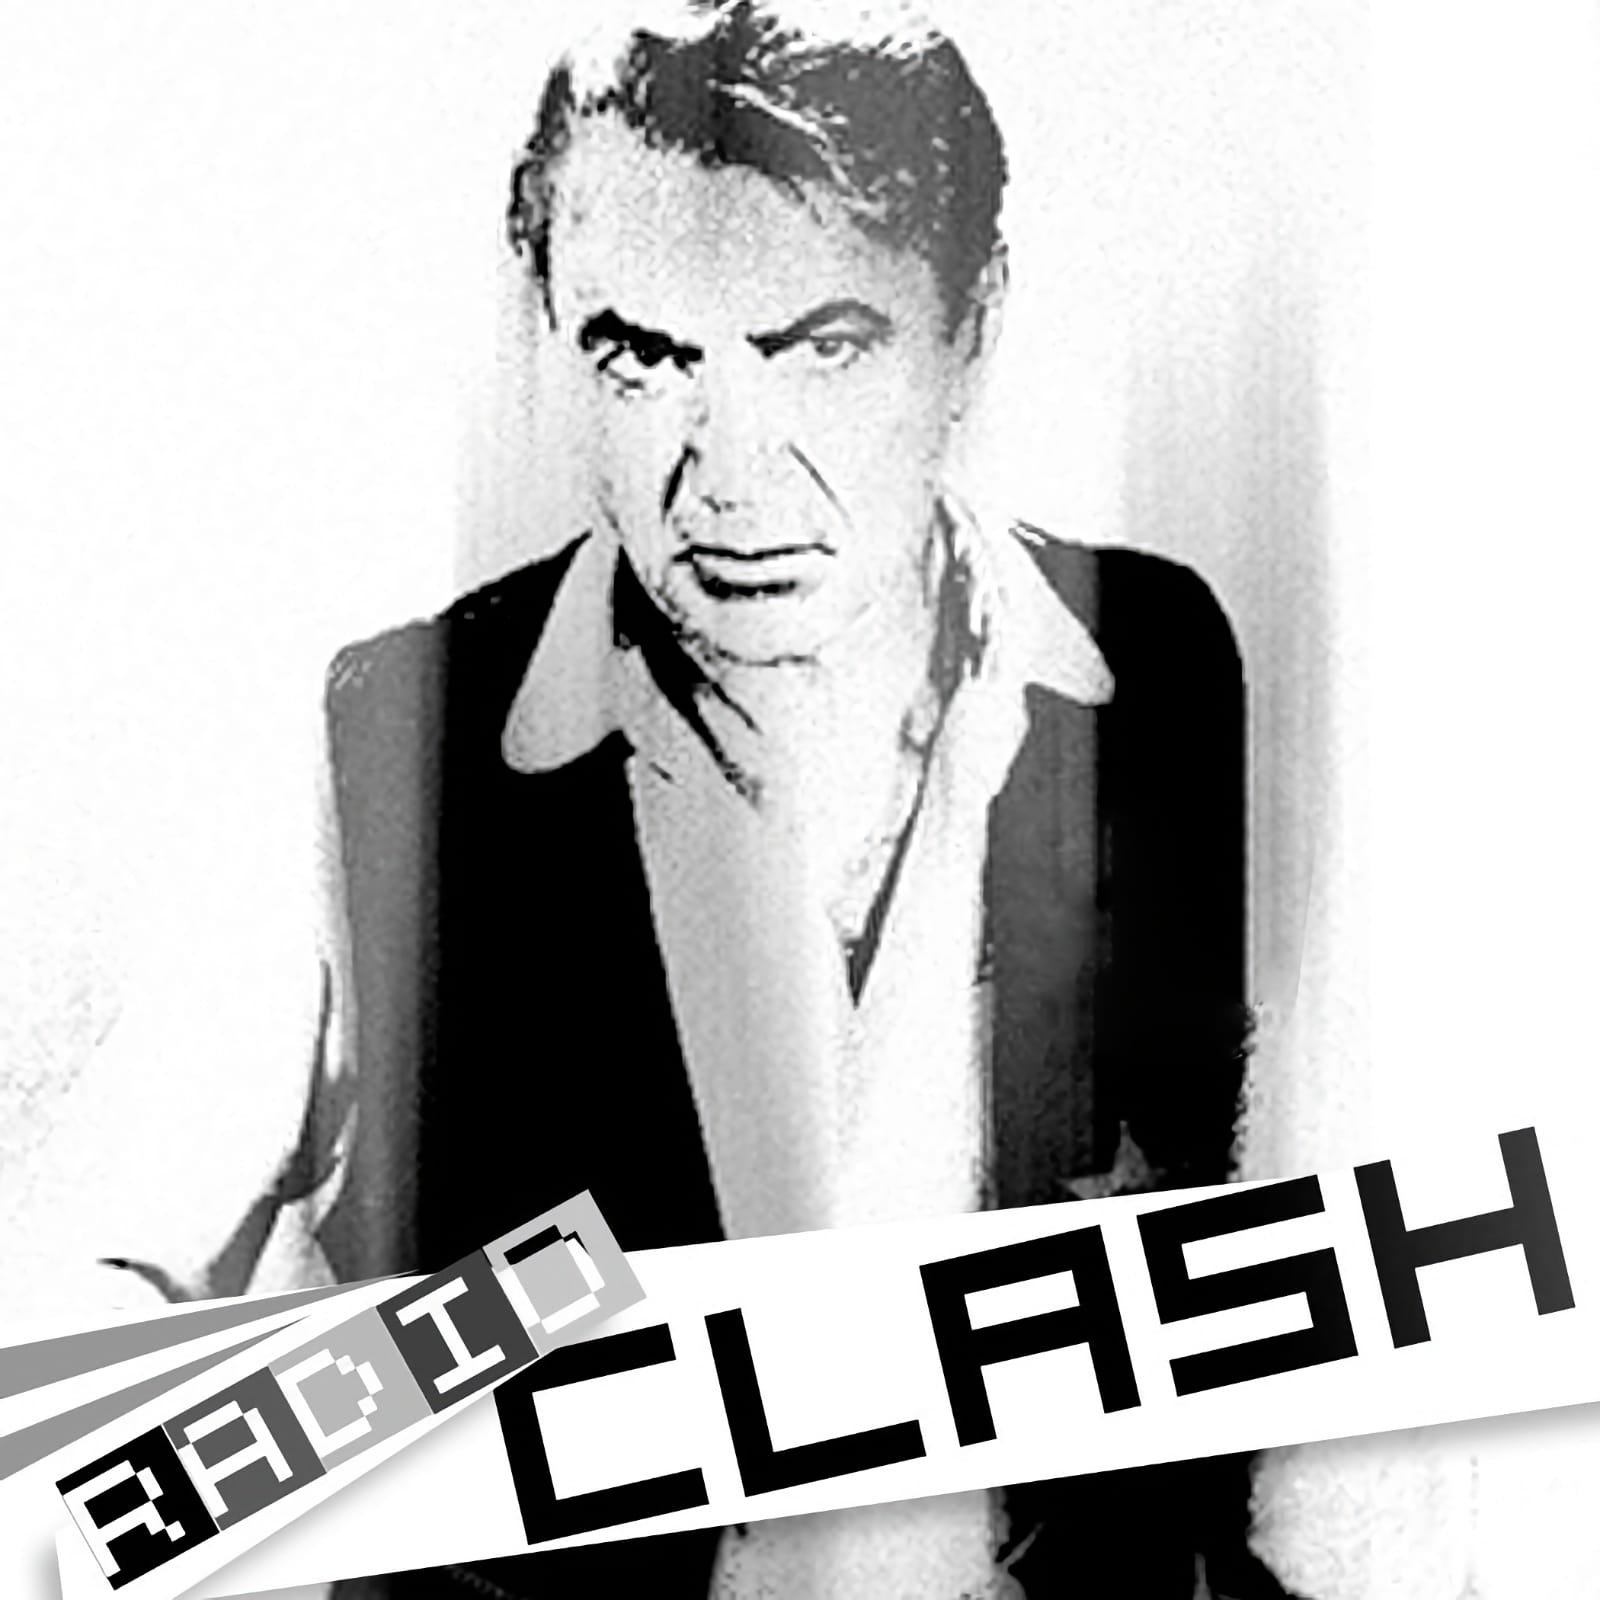 New Radio Clash is coming…